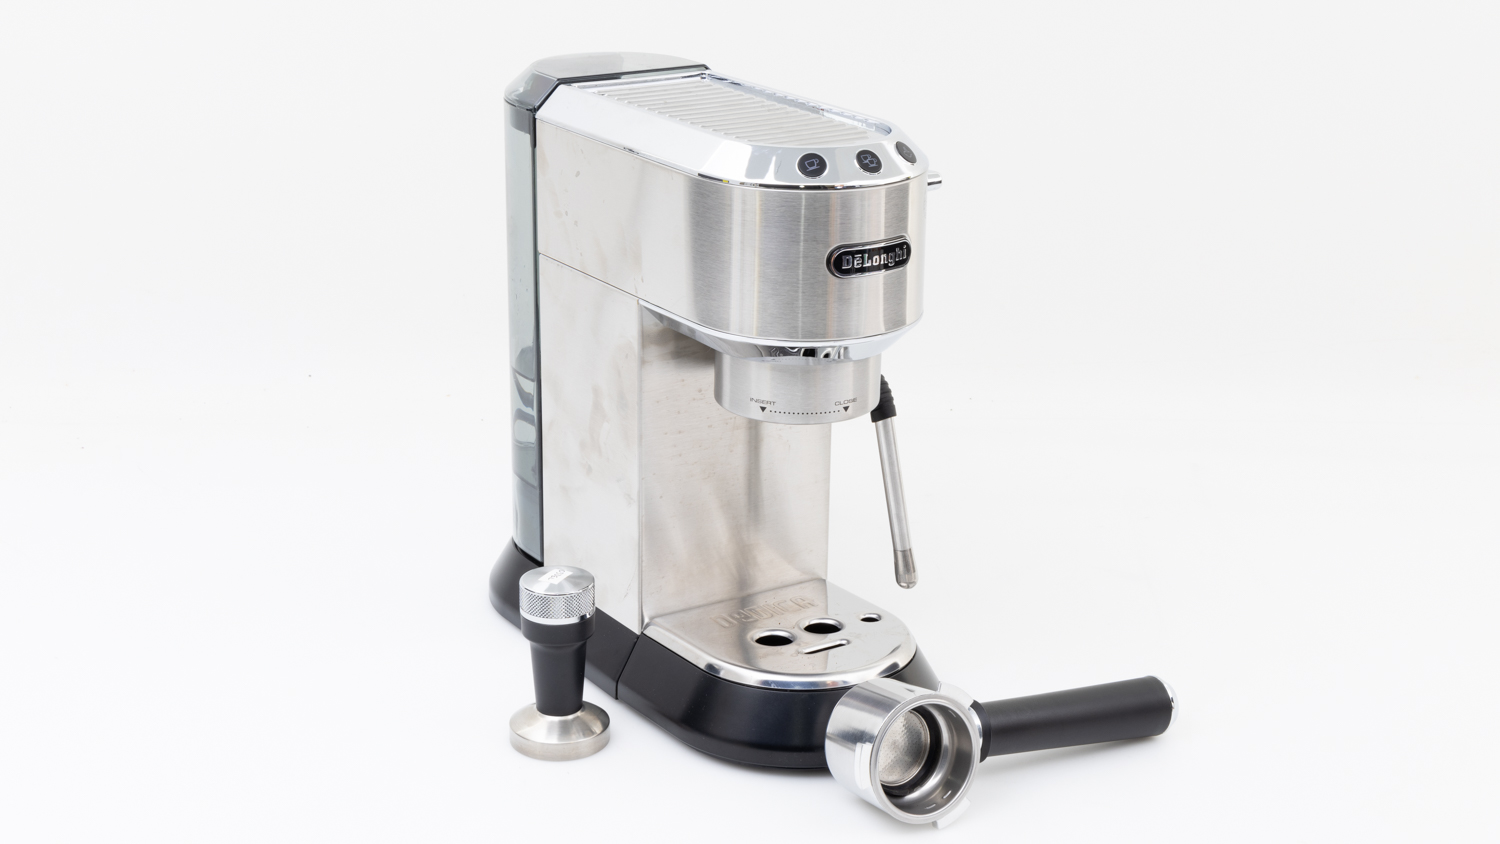 DeLonghi Dedica Arte EC885 Review, Home espresso coffee machine